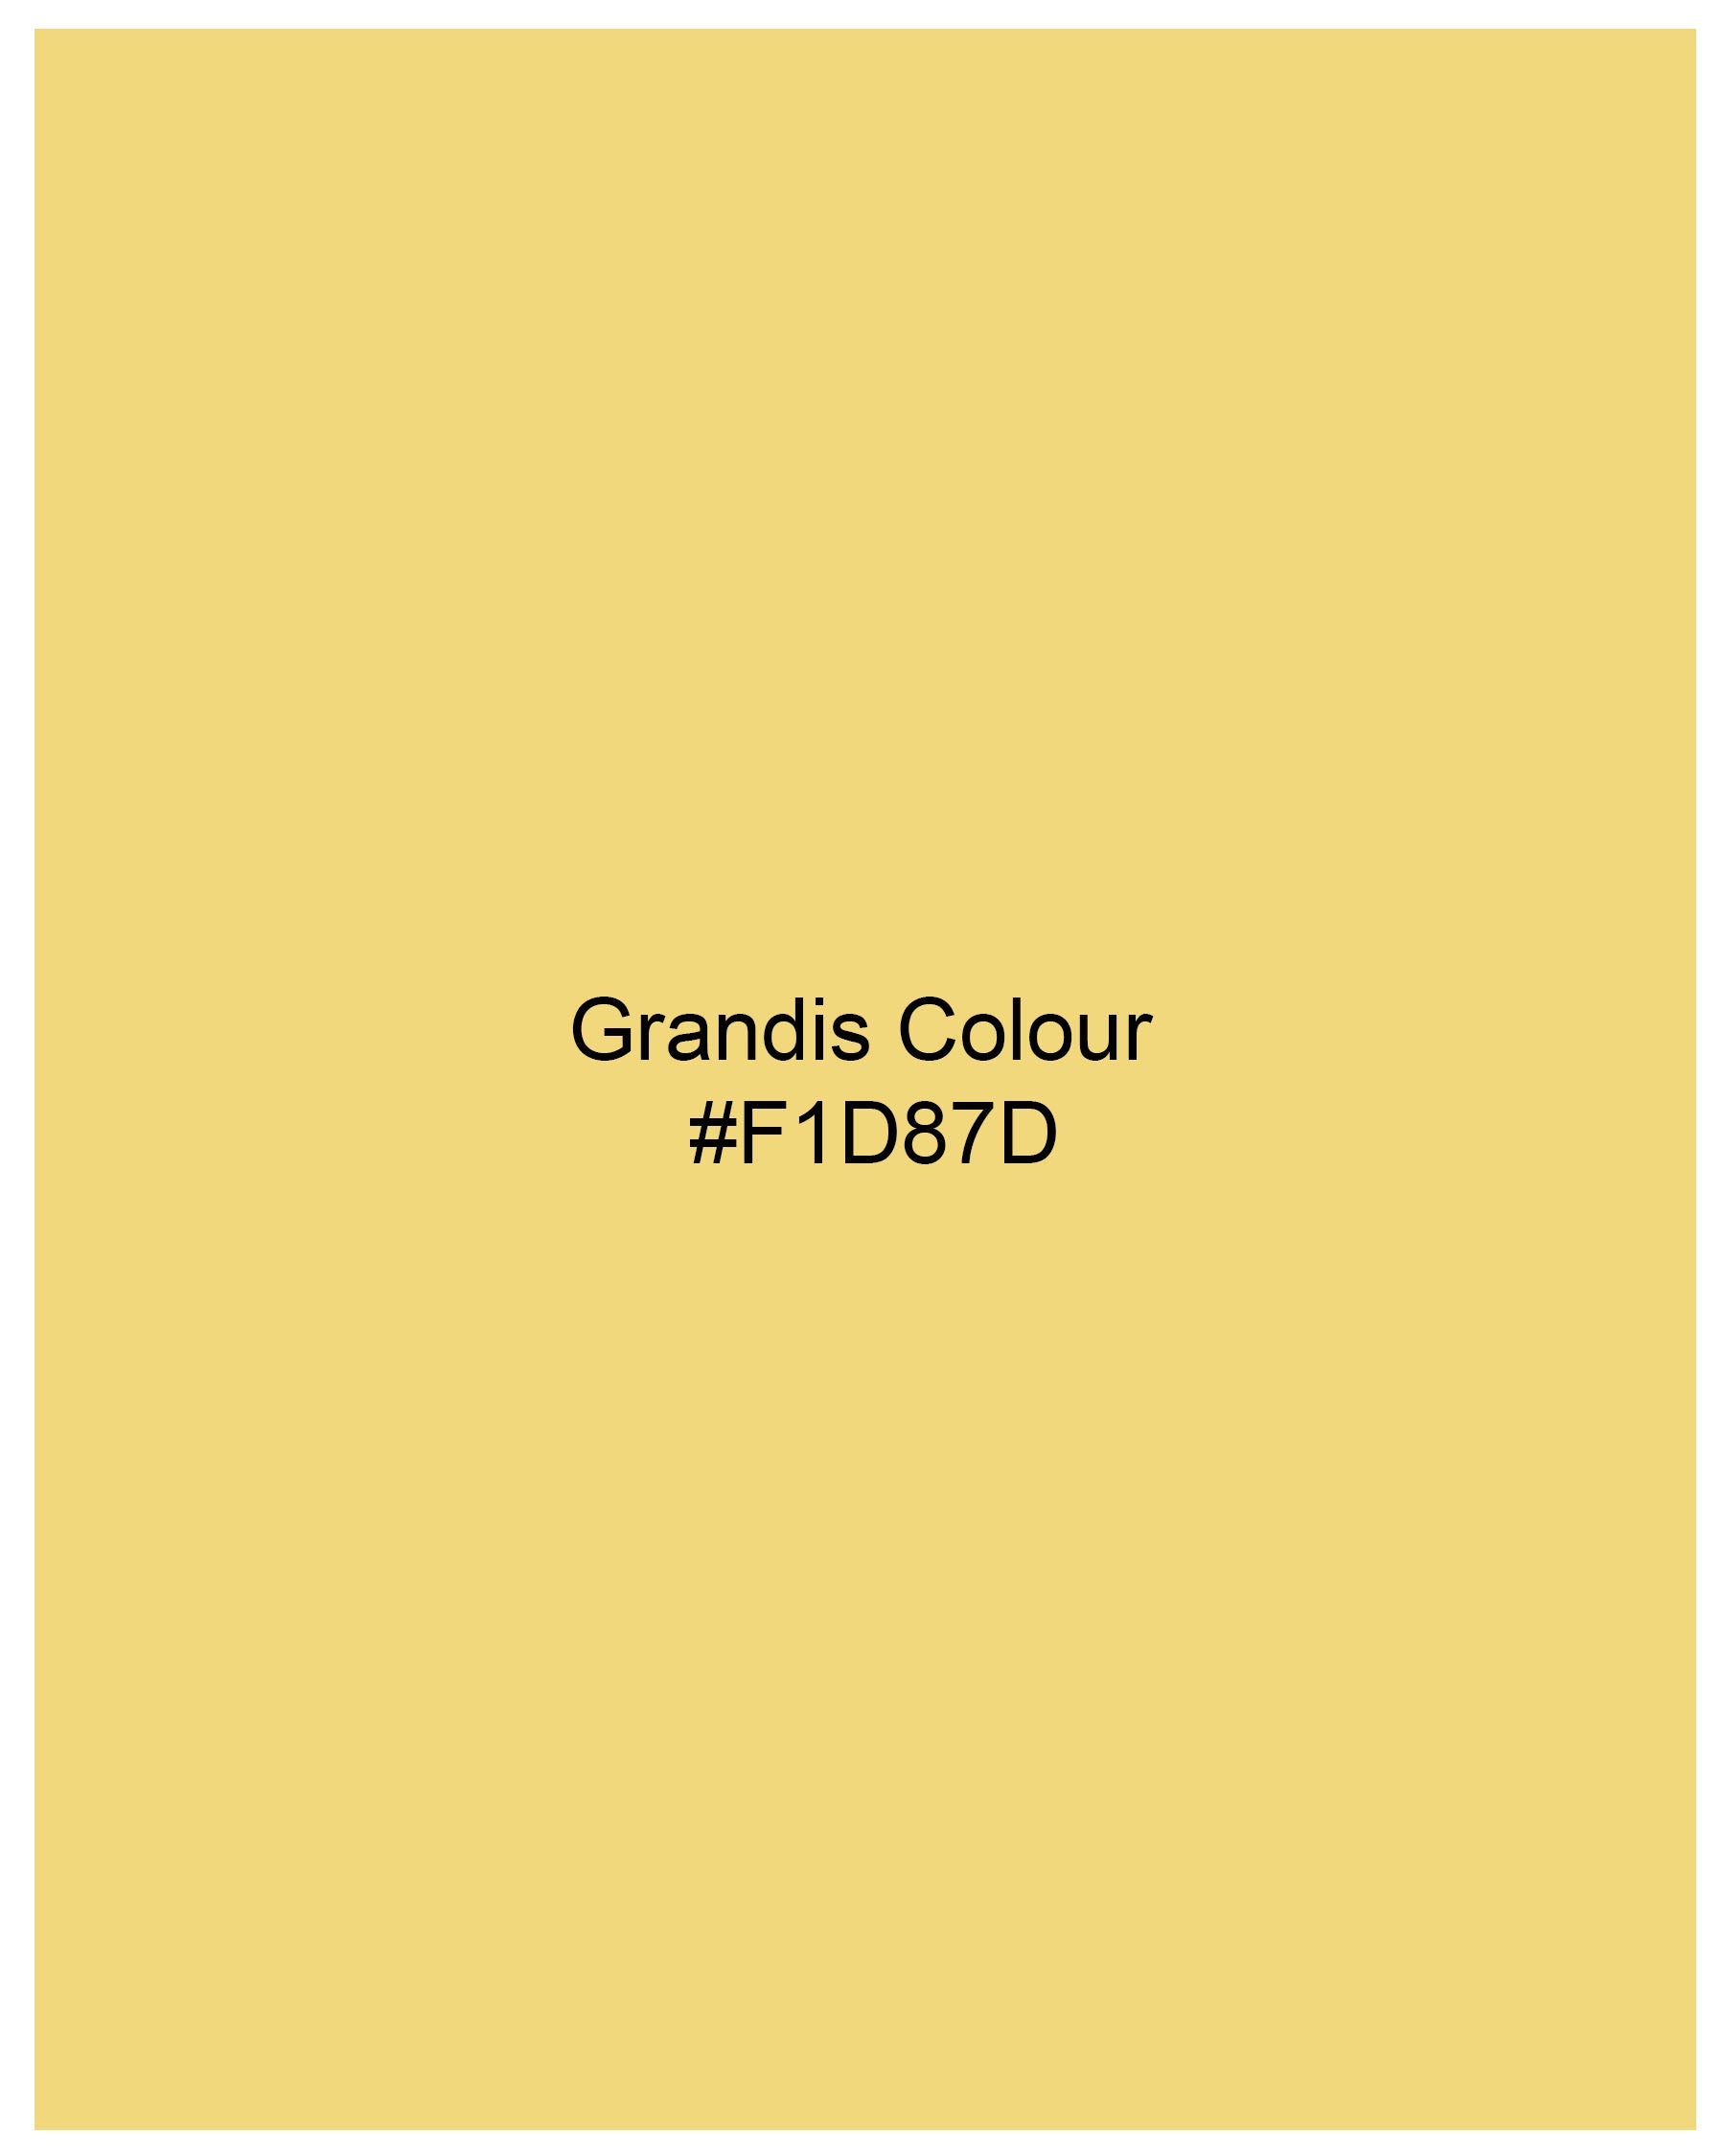 Grandis Yellow Luxurious Linen Shirt 7890-M -38,7890-M -H-38,7890-M -39,7890-M -H-39,7890-M -40,7890-M -H-40,7890-M -42,7890-M -H-42,7890-M -44,7890-M -H-44,7890-M -46,7890-M -H-46,7890-M -48,7890-M -H-48,7890-M -50,7890-M -H-50,7890-M -52,7890-M -H-52